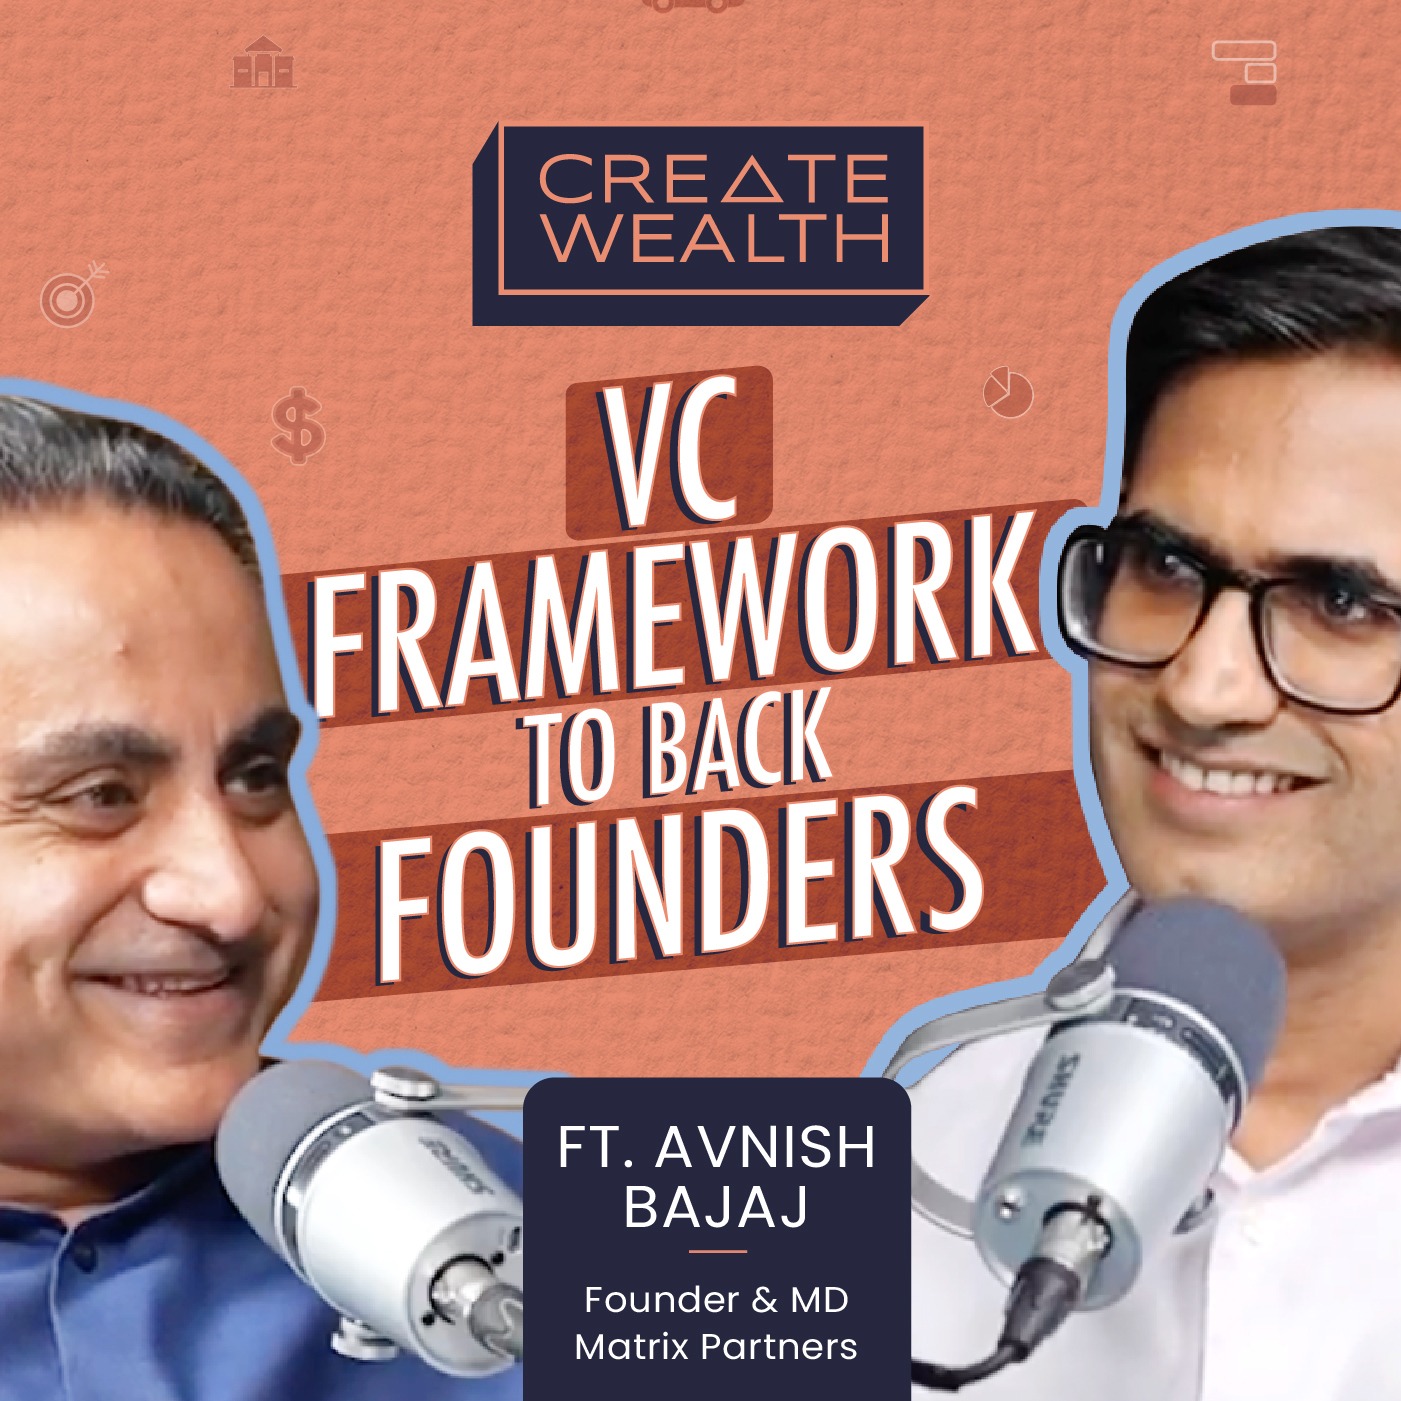 Journey of India's leading Venture Capitalist Ft. AVNISH BAJAJ, Founder - Matrix Partners India